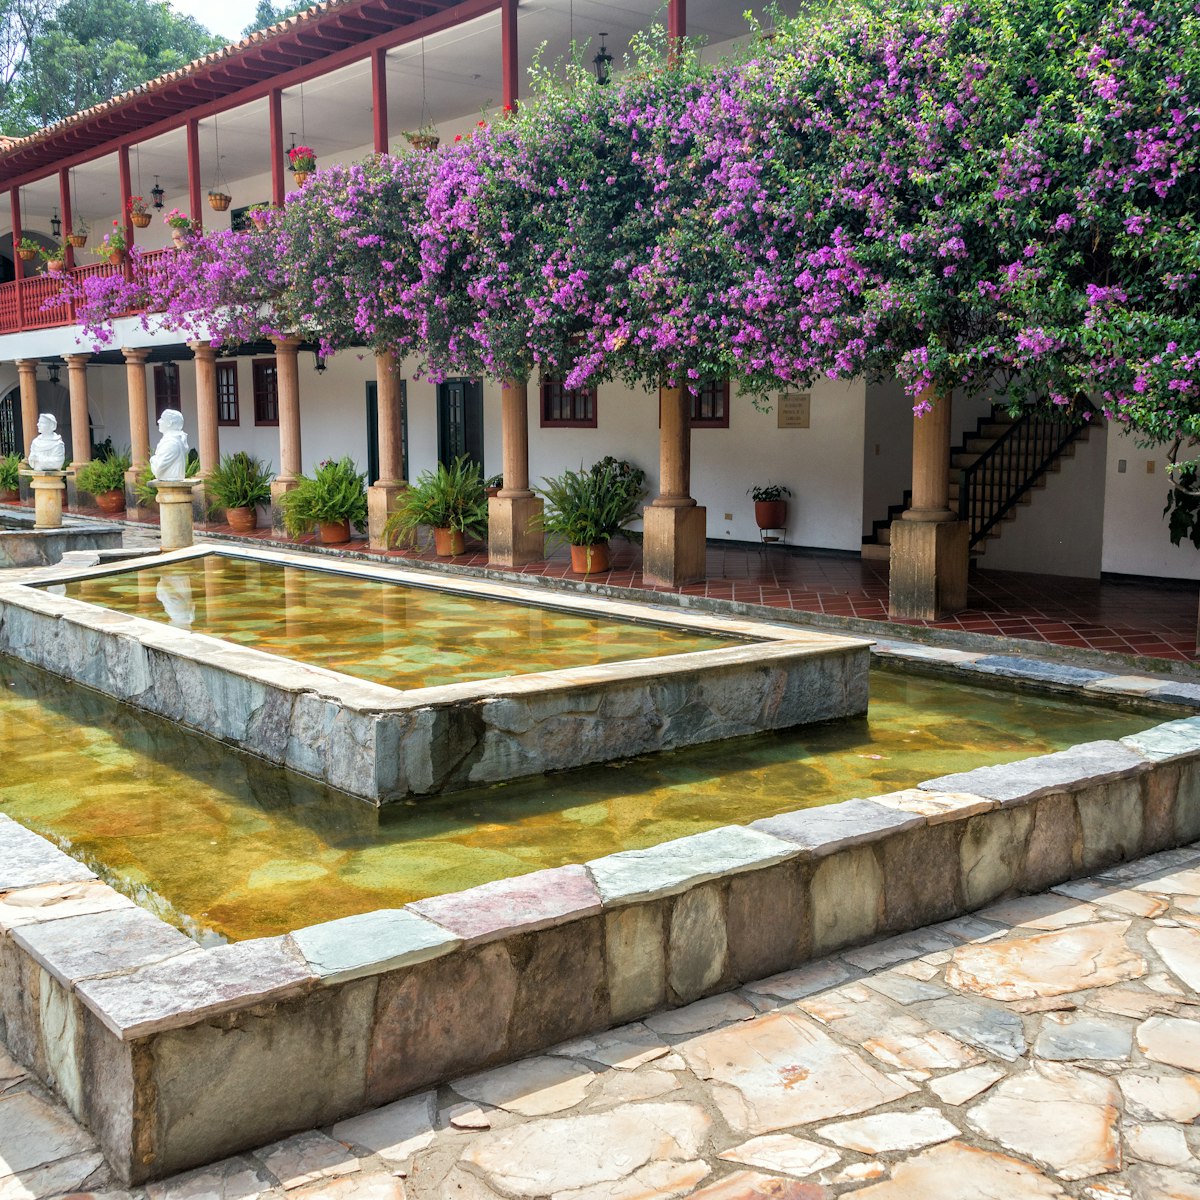 Inner courtyard of La Candelaria Monastery near the town of Raquira in Boyaca, Colombia.